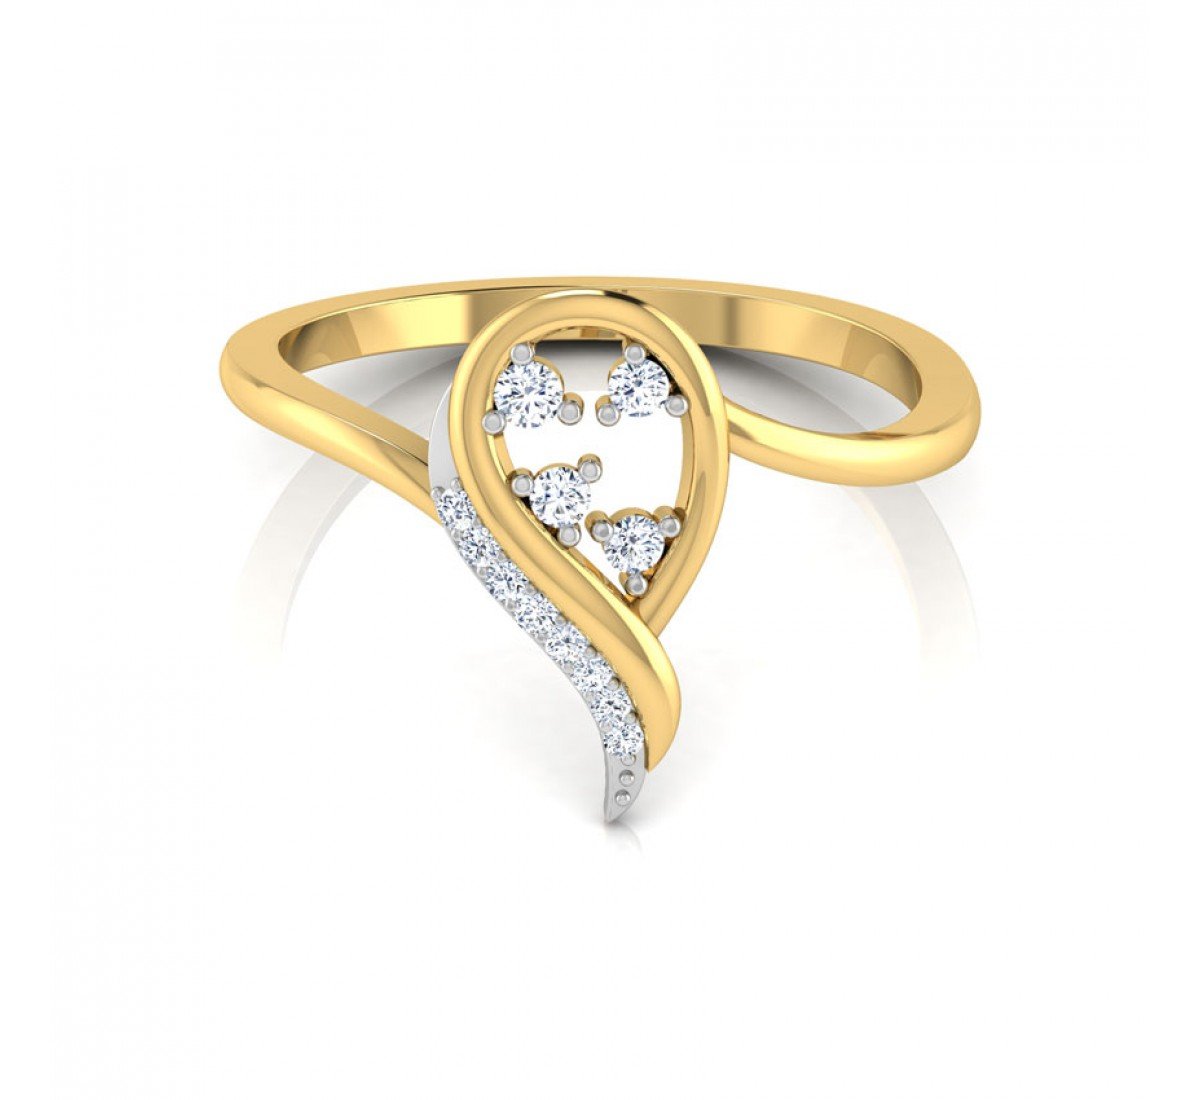 Glistening Kshipra Diamond Ring